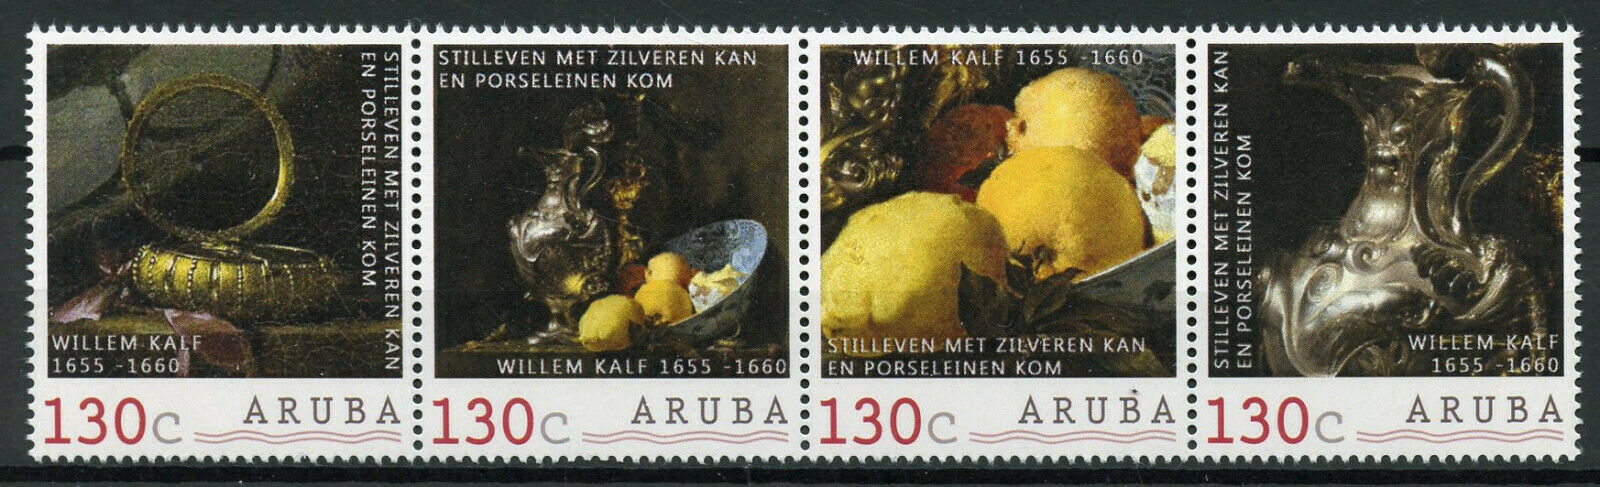 Aruba 2018 MNH Art Stamps Still Life Willem Kalf Paintings 4v Strip